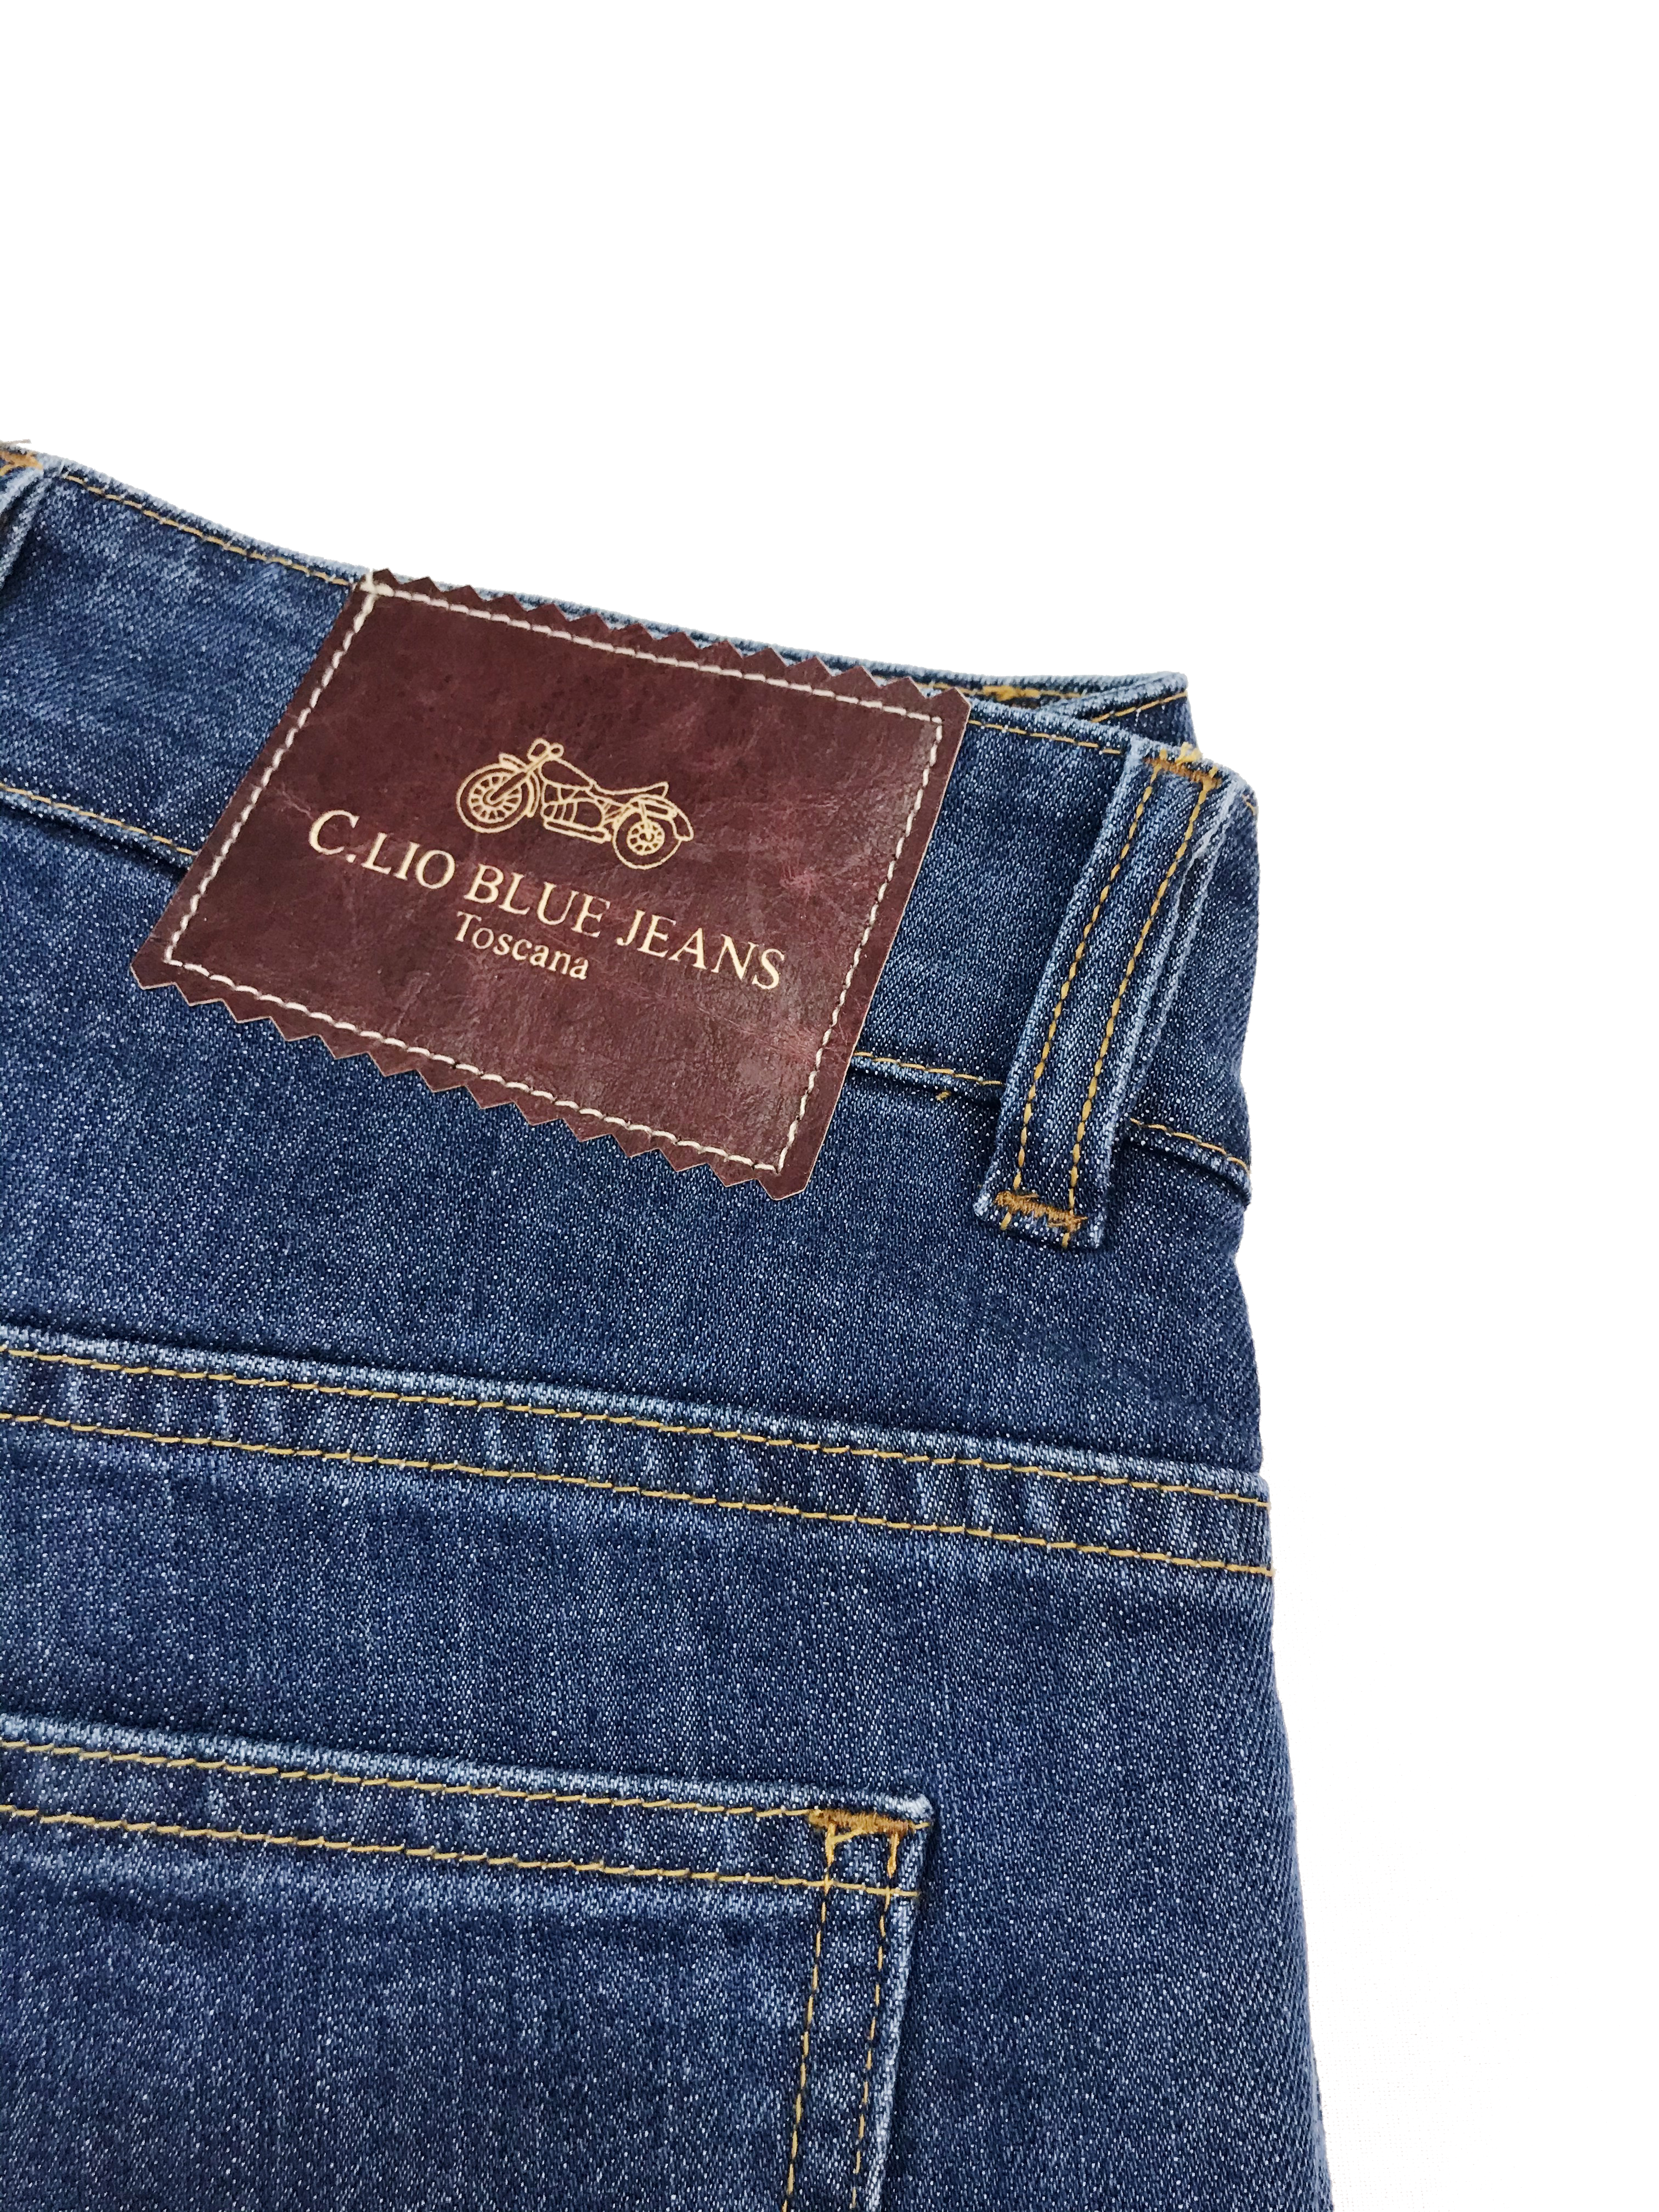 C.Lio Blue Jeans